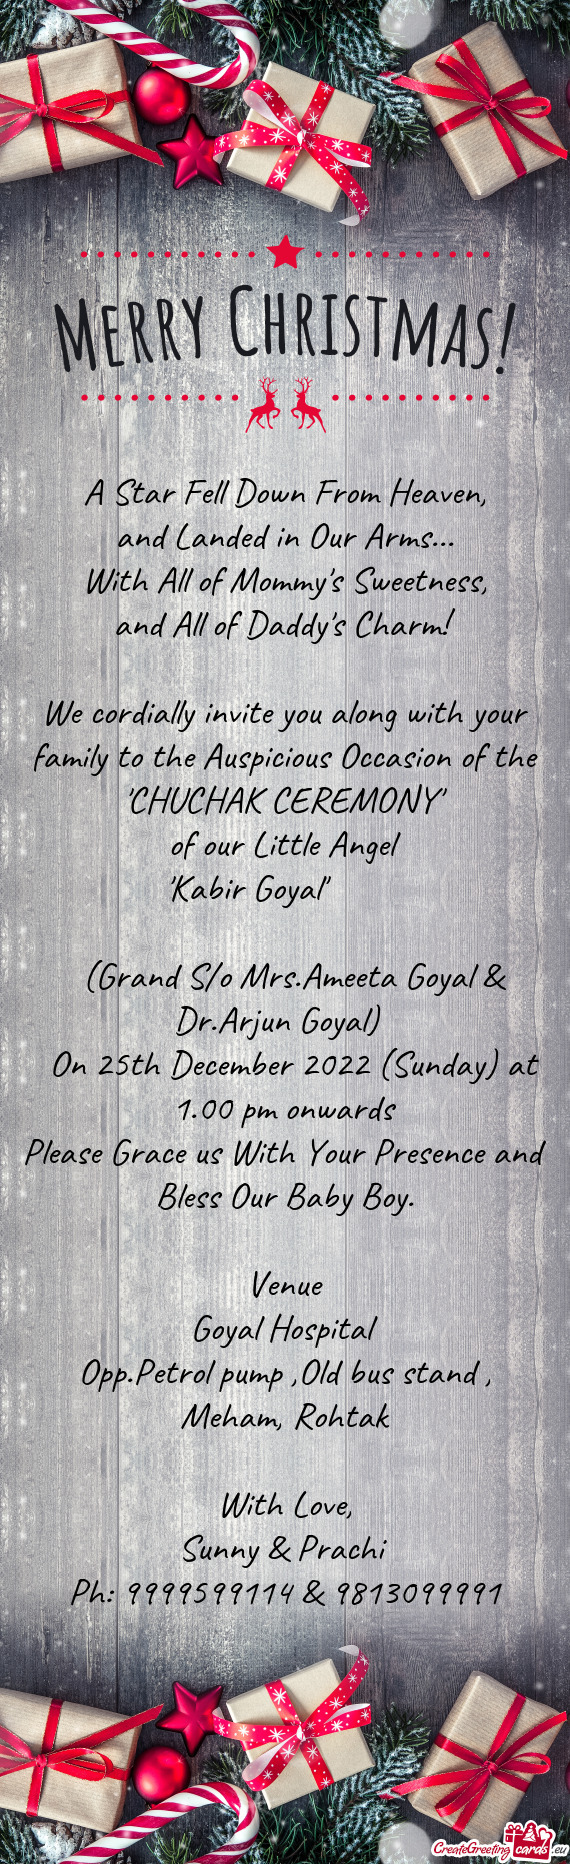 "Kabir Goyal"        (Grand S/o Mrs.Ameeta Goyal & Dr.Arjun G